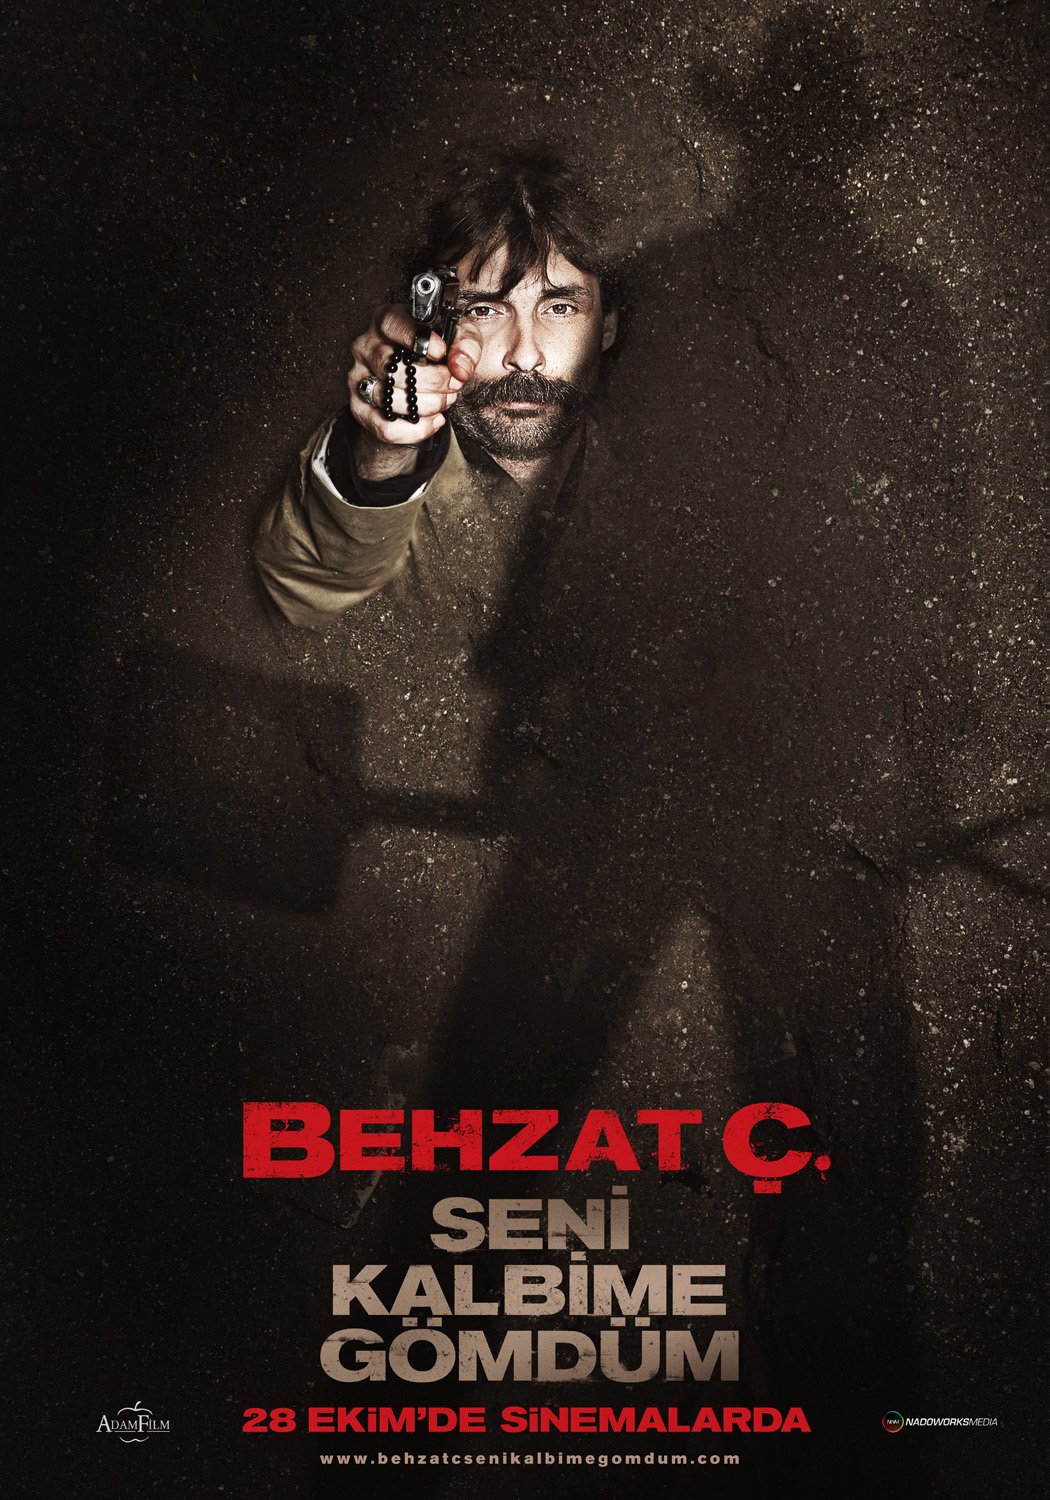 Extra Large Movie Poster Image for Behzat Ç - Seni Kalbime Gömdüm (#2 of 12)